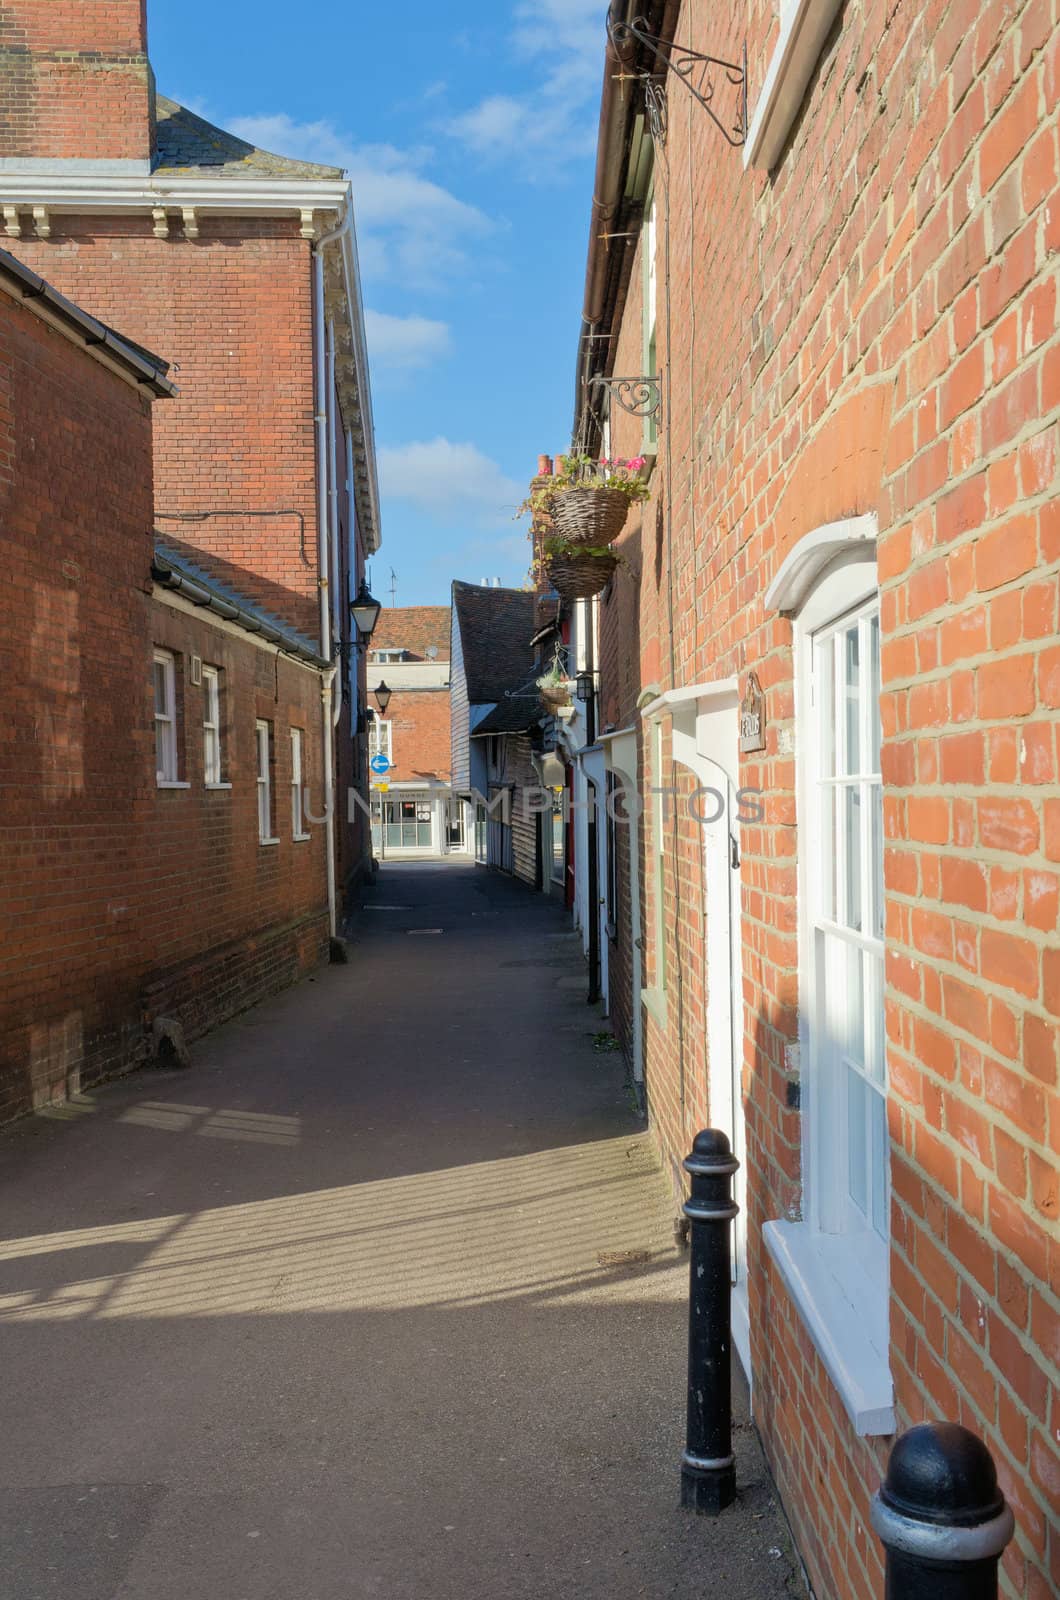 Gatefield lane in Faversham Kent.A narrow alleyway leading to the high street